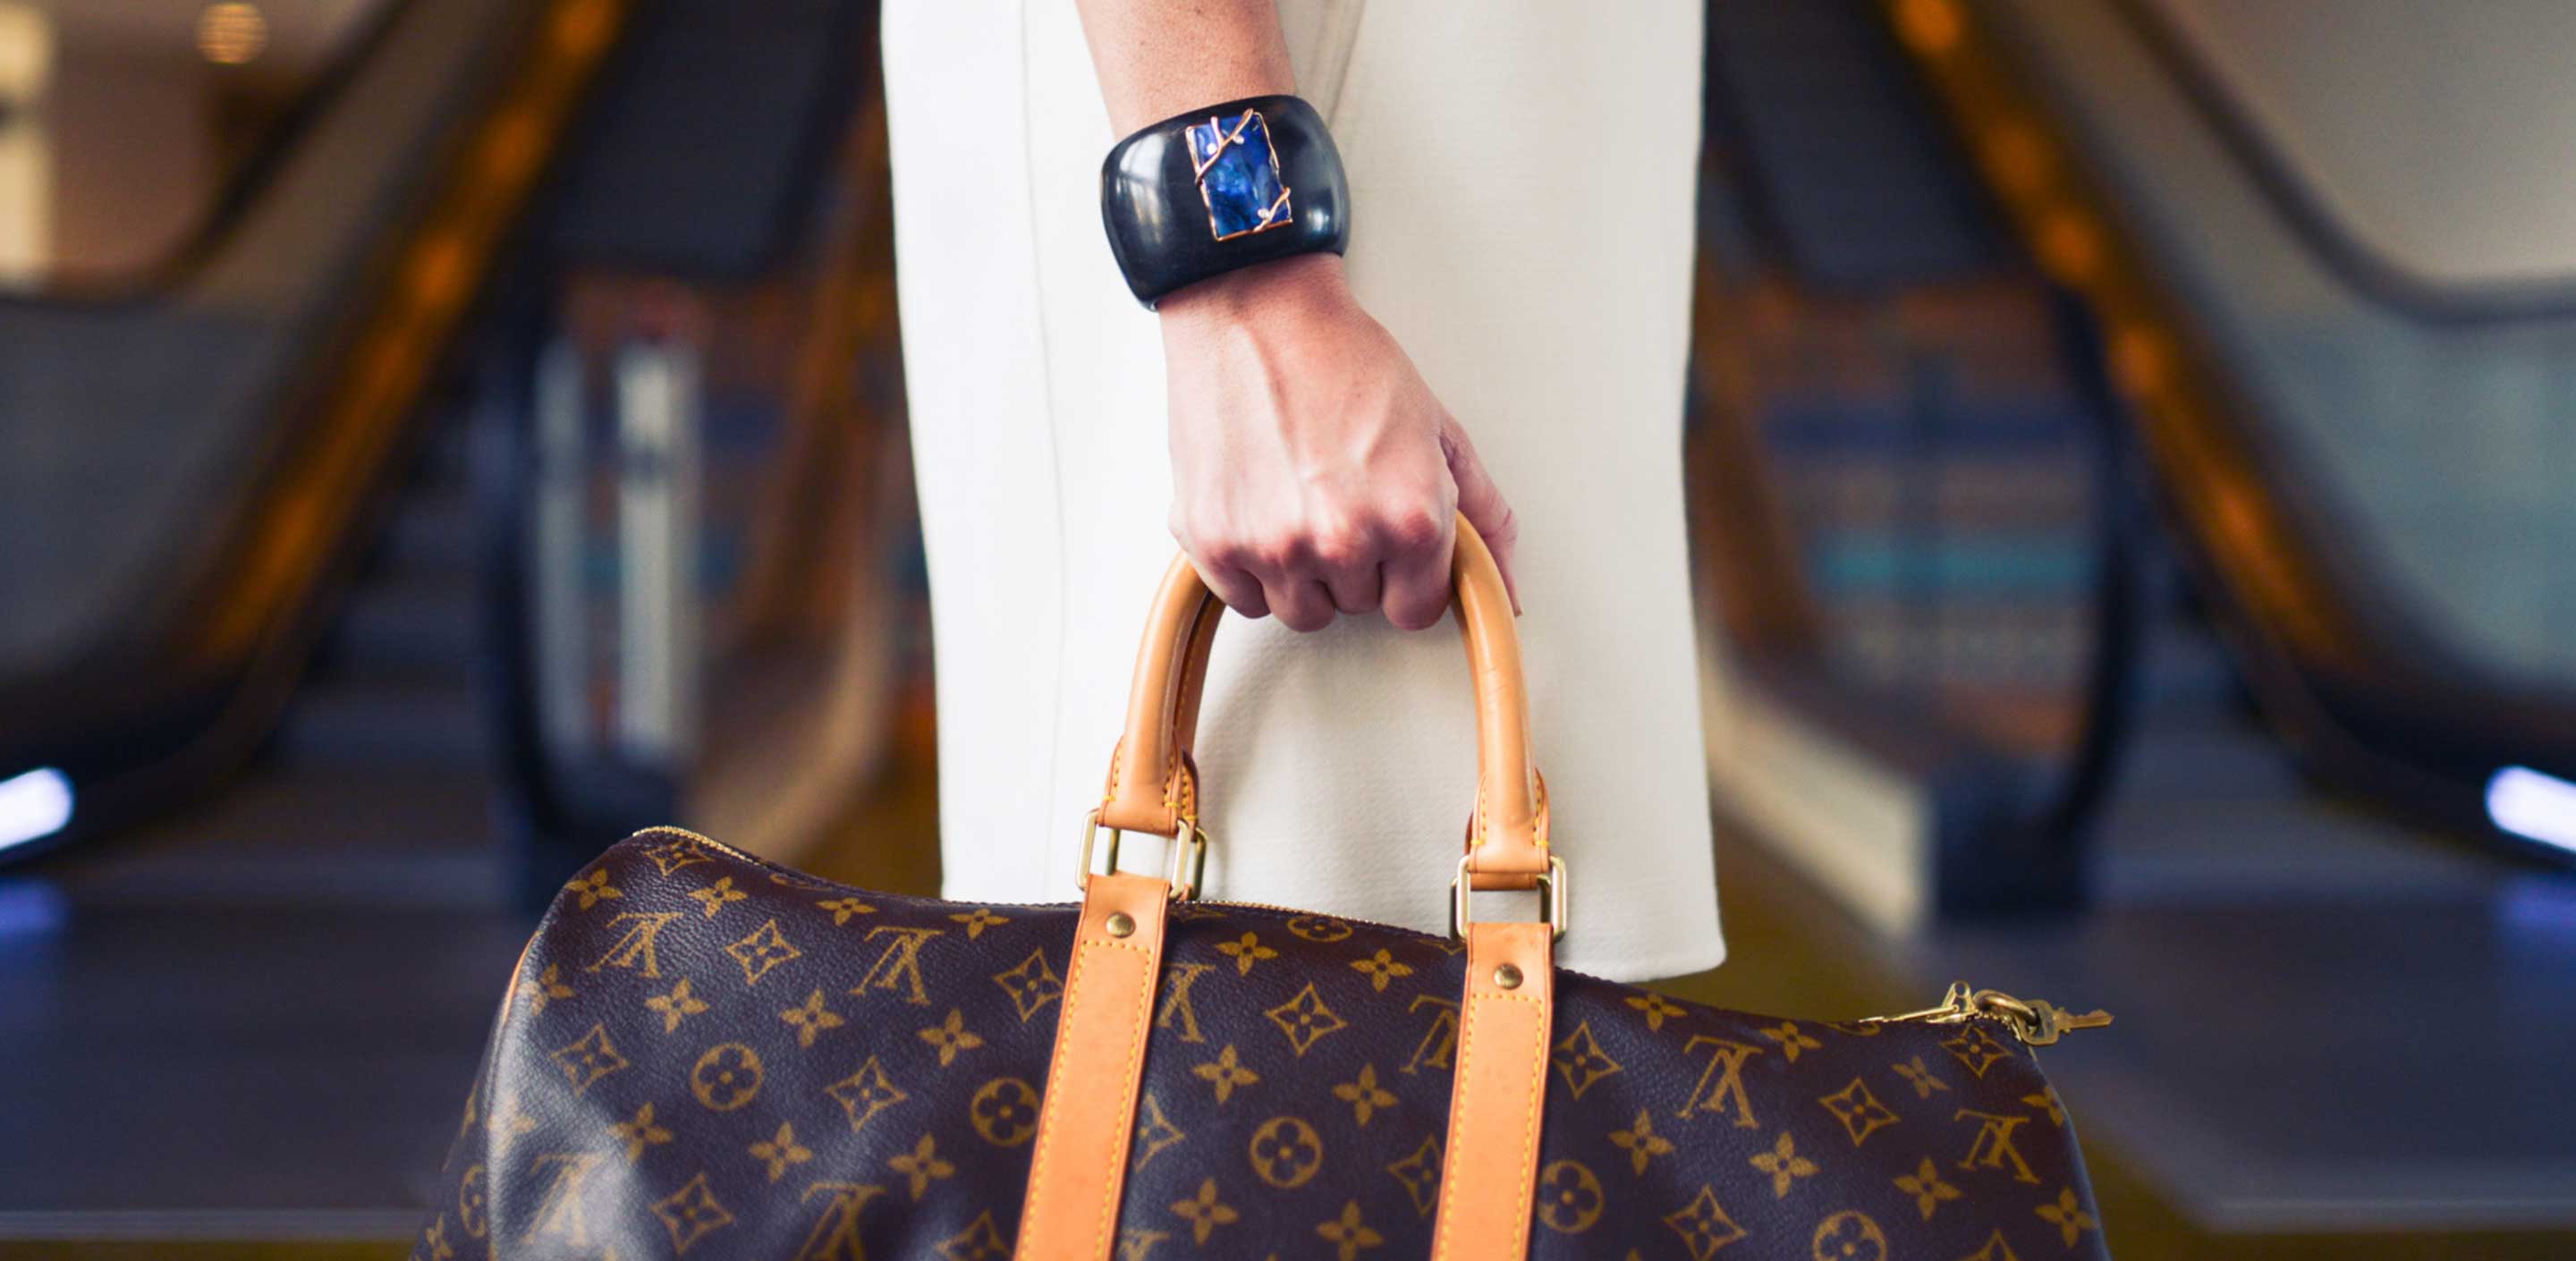 How to refurbish a Louis Vuitton bag (epi leather) 